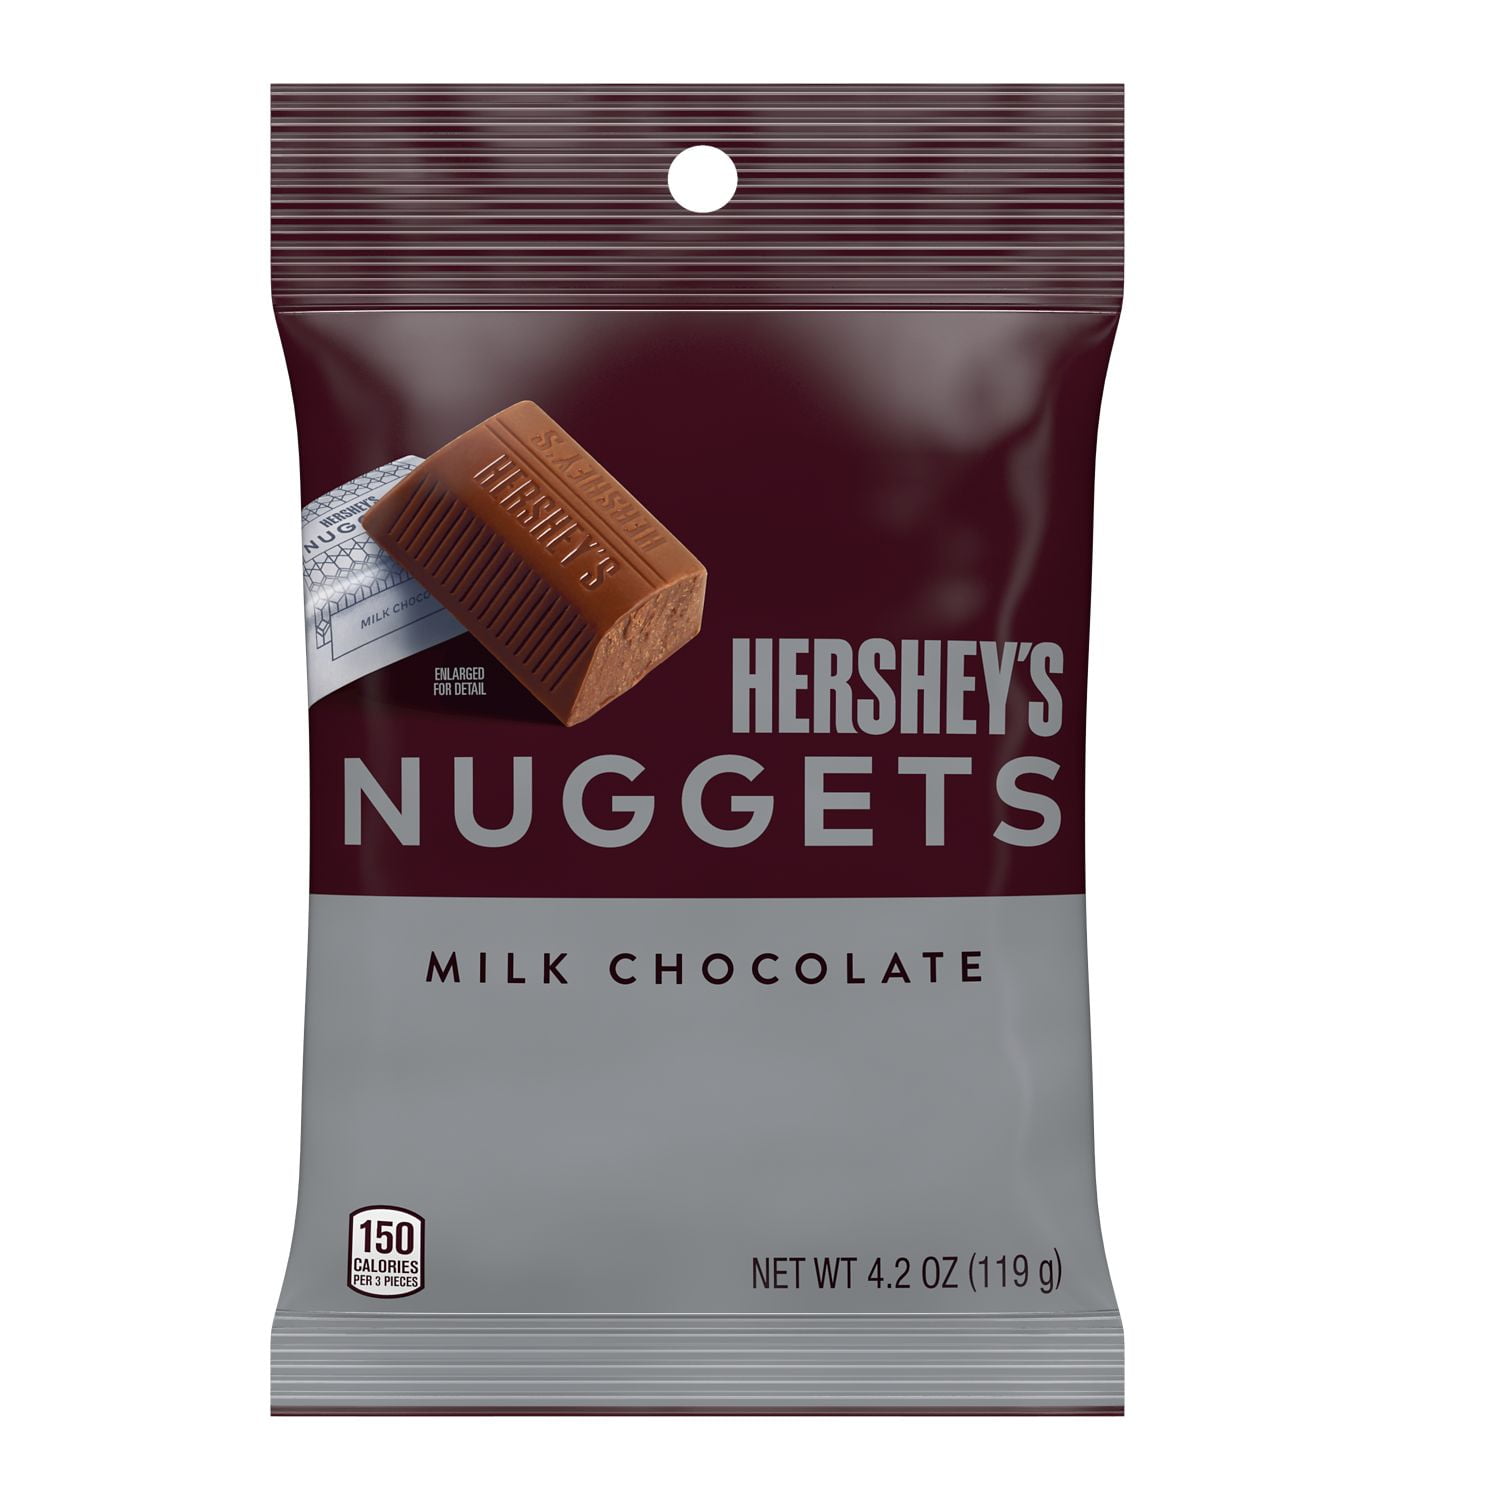 Hershey's Nuggets Milk Chocolate Candy, Gluten Free, 4.2 oz Bag